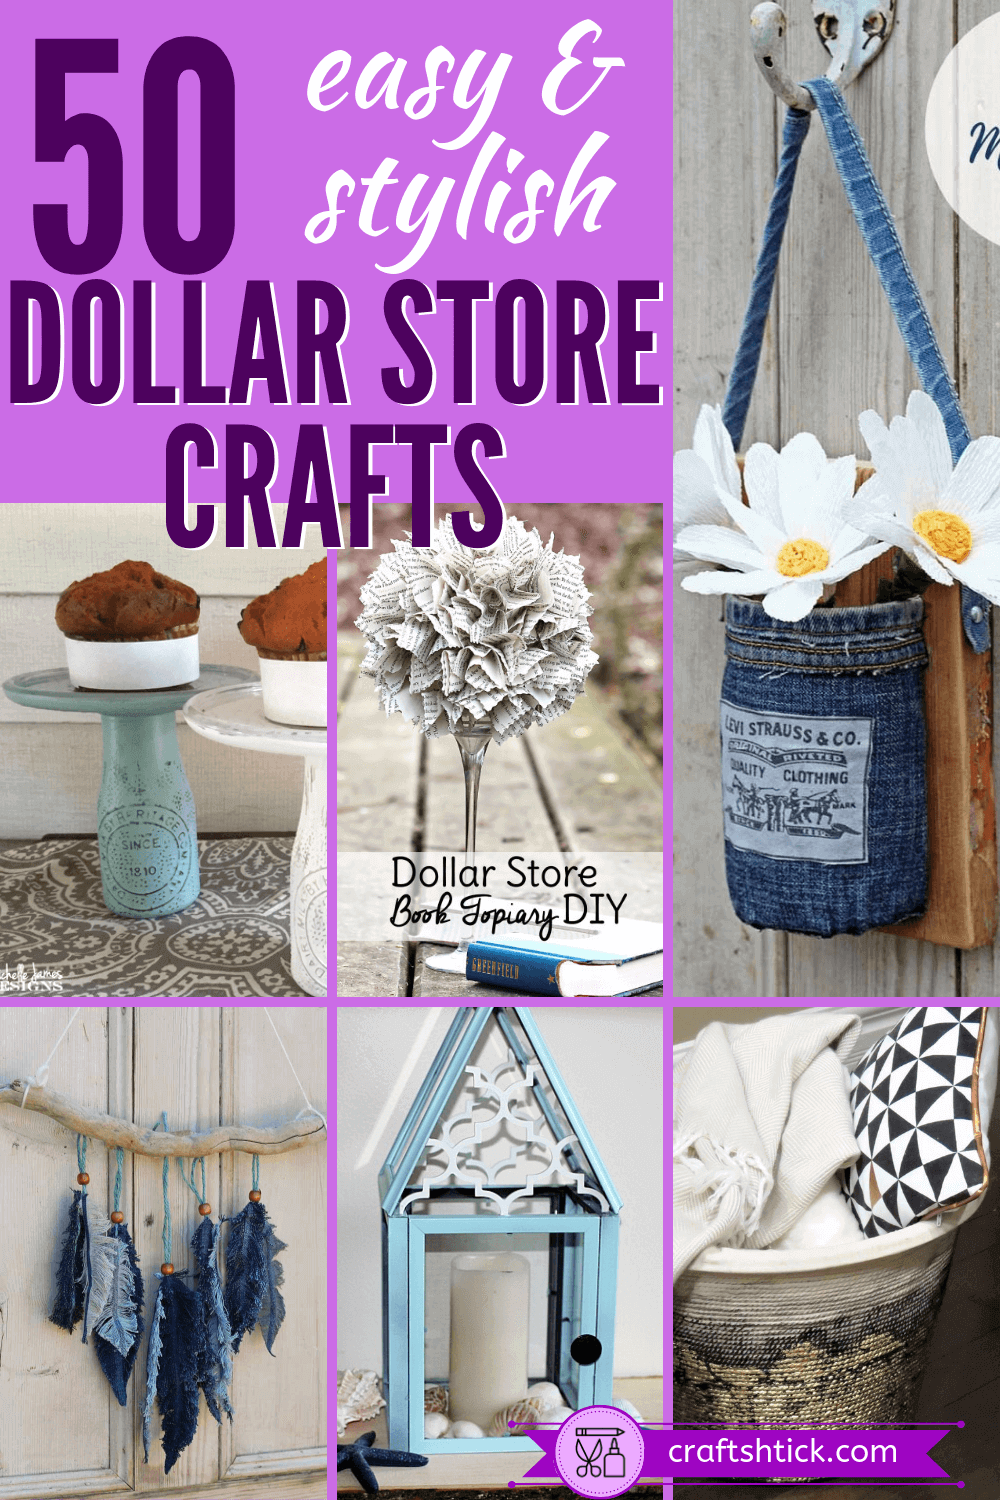 diy Dollar Tree crafts